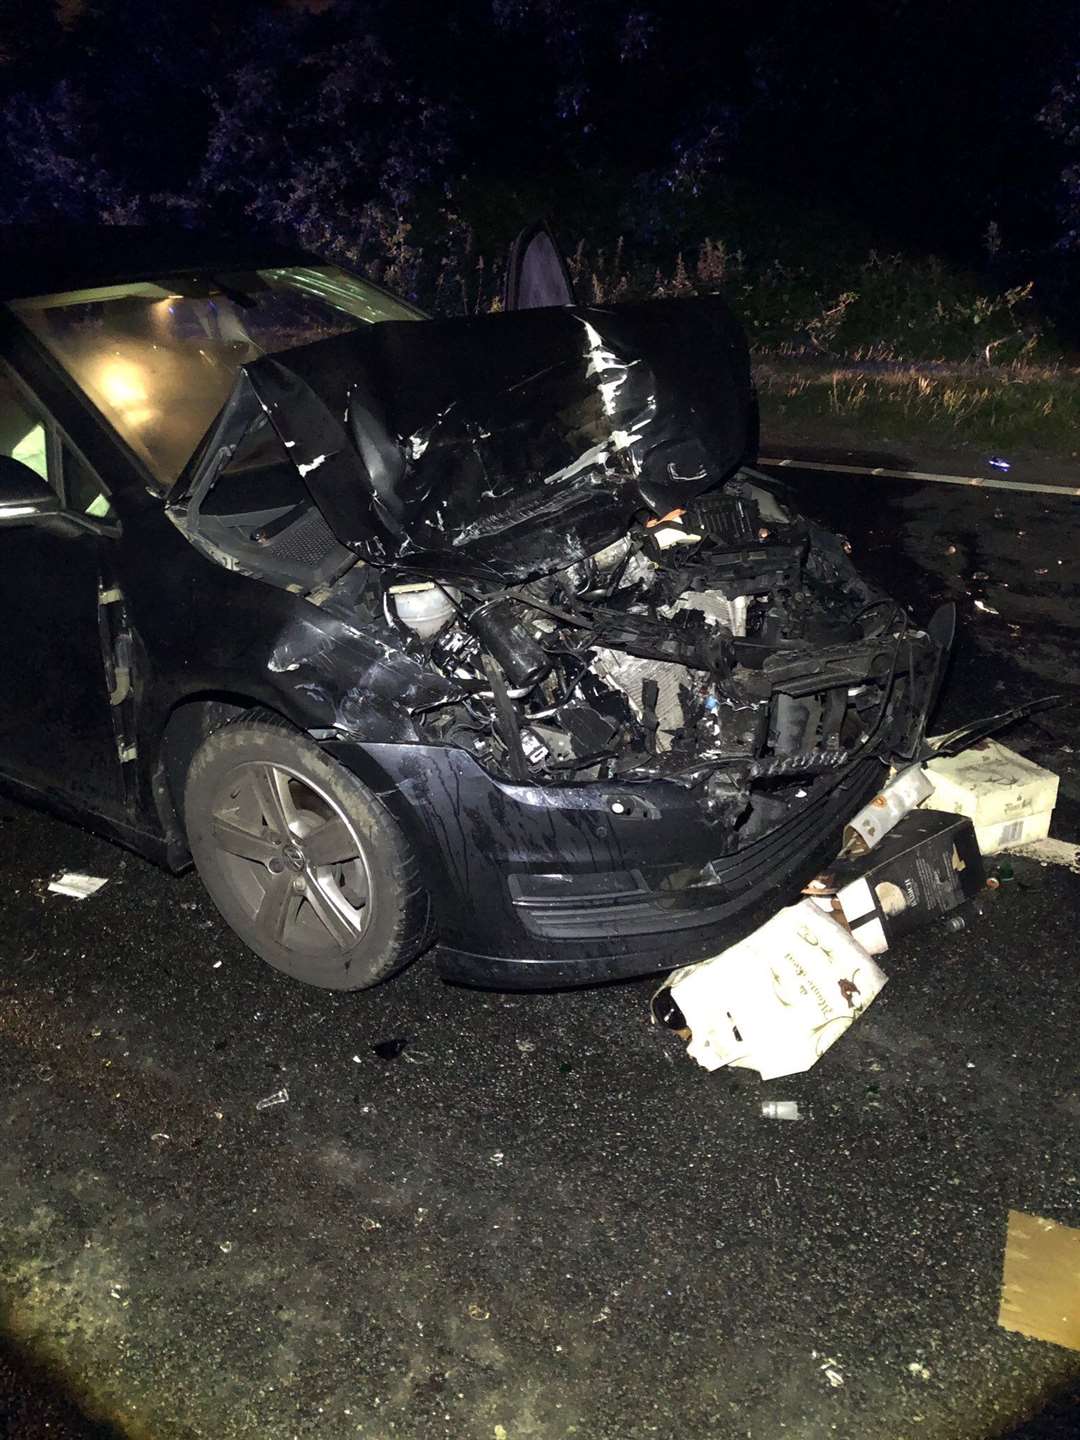 A249 crash Pic: Kent Specials on Twitter (12806099)